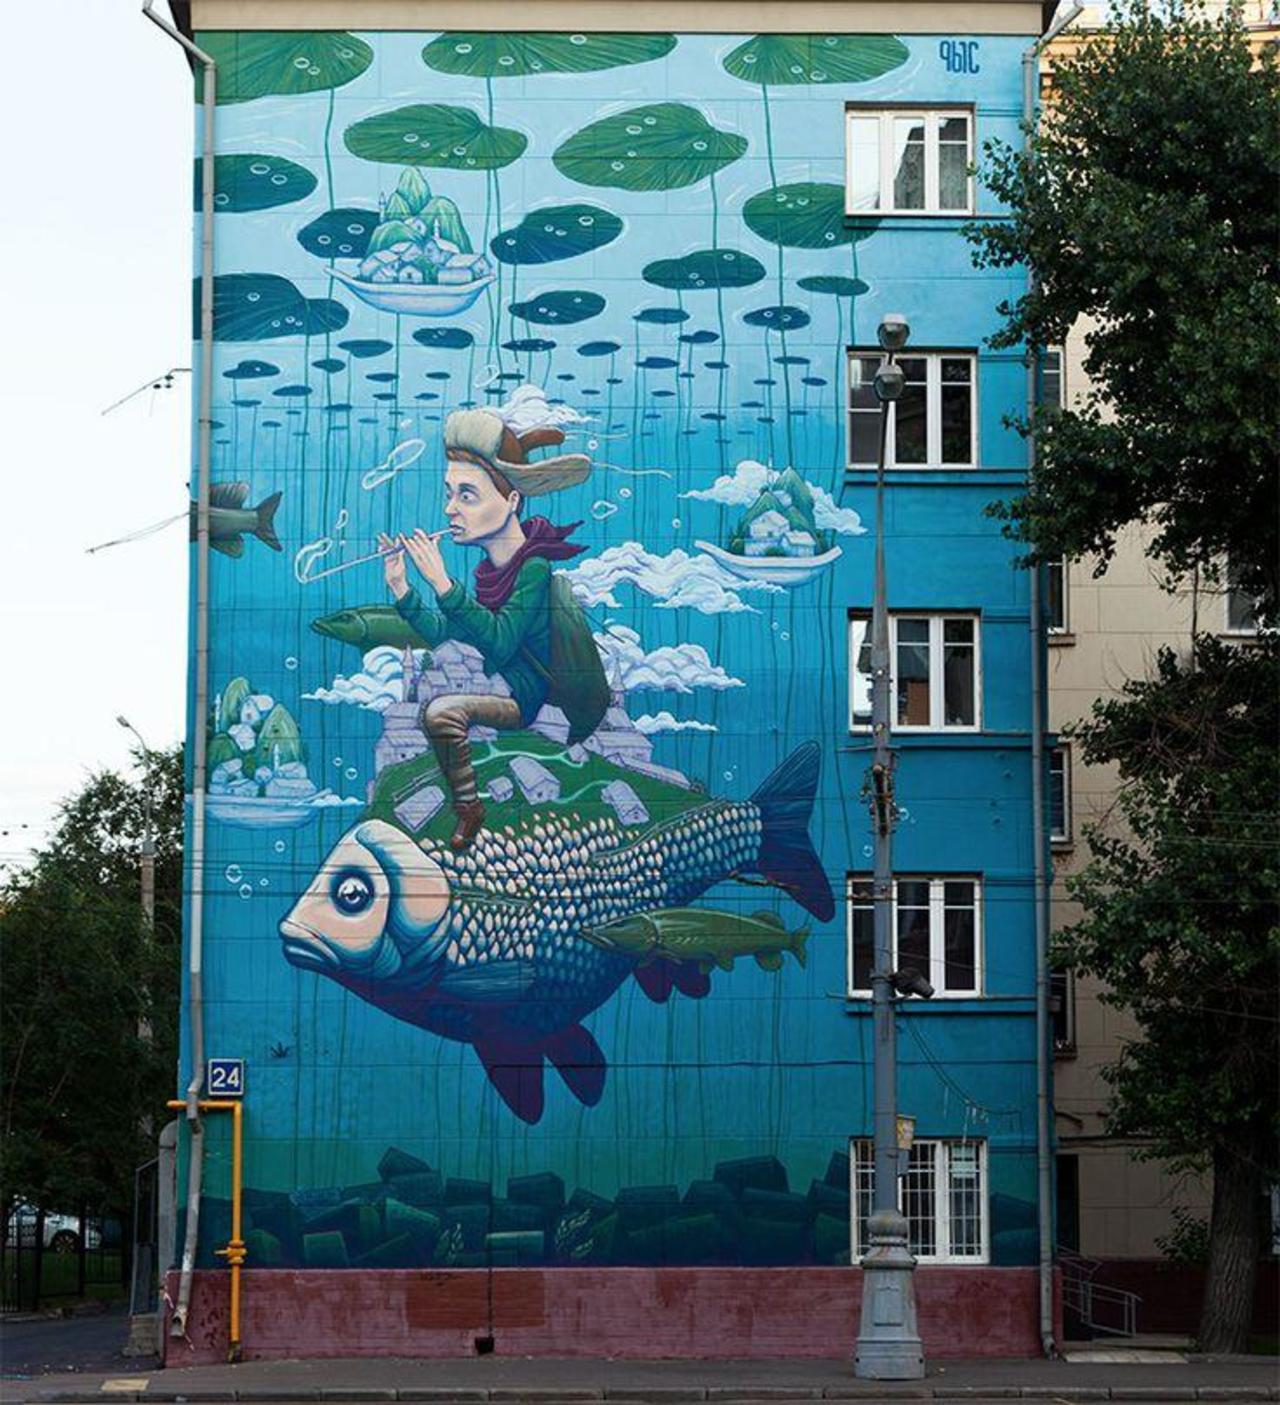 Cool ... "@5putnik1: Under the Urban Waters • #streetart #graffiti #art #funky #dope . : http://t.co/1BdXVhfzCg"